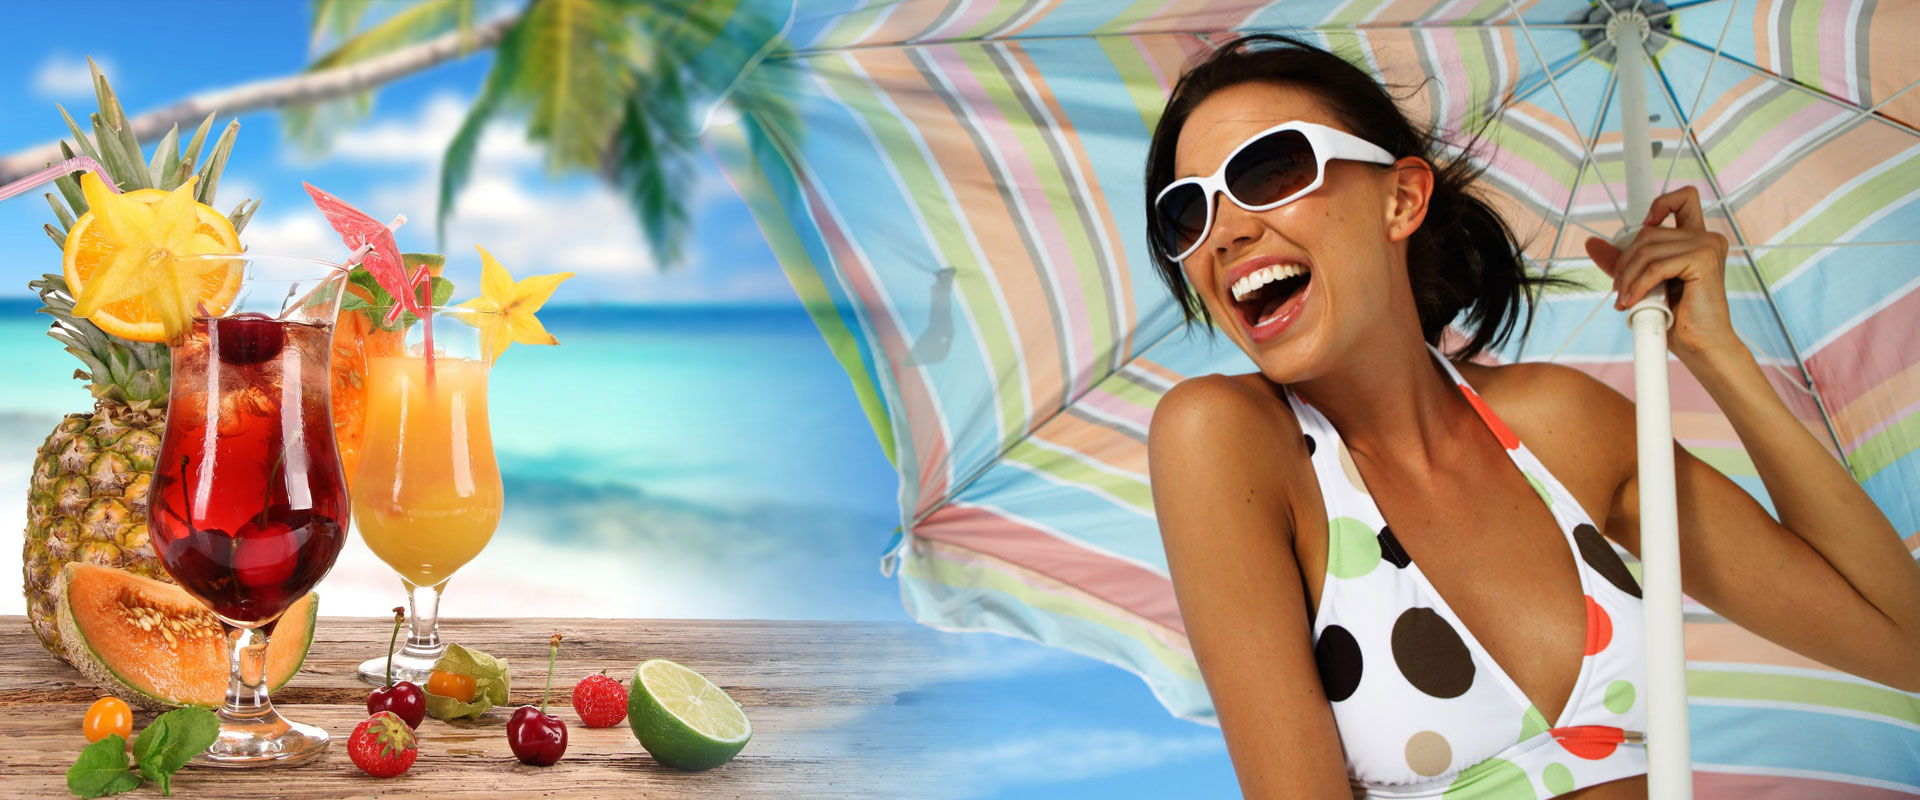 Offerte vacanze Mamatours prodotti  vacanze viaggi single affitti vacanze 